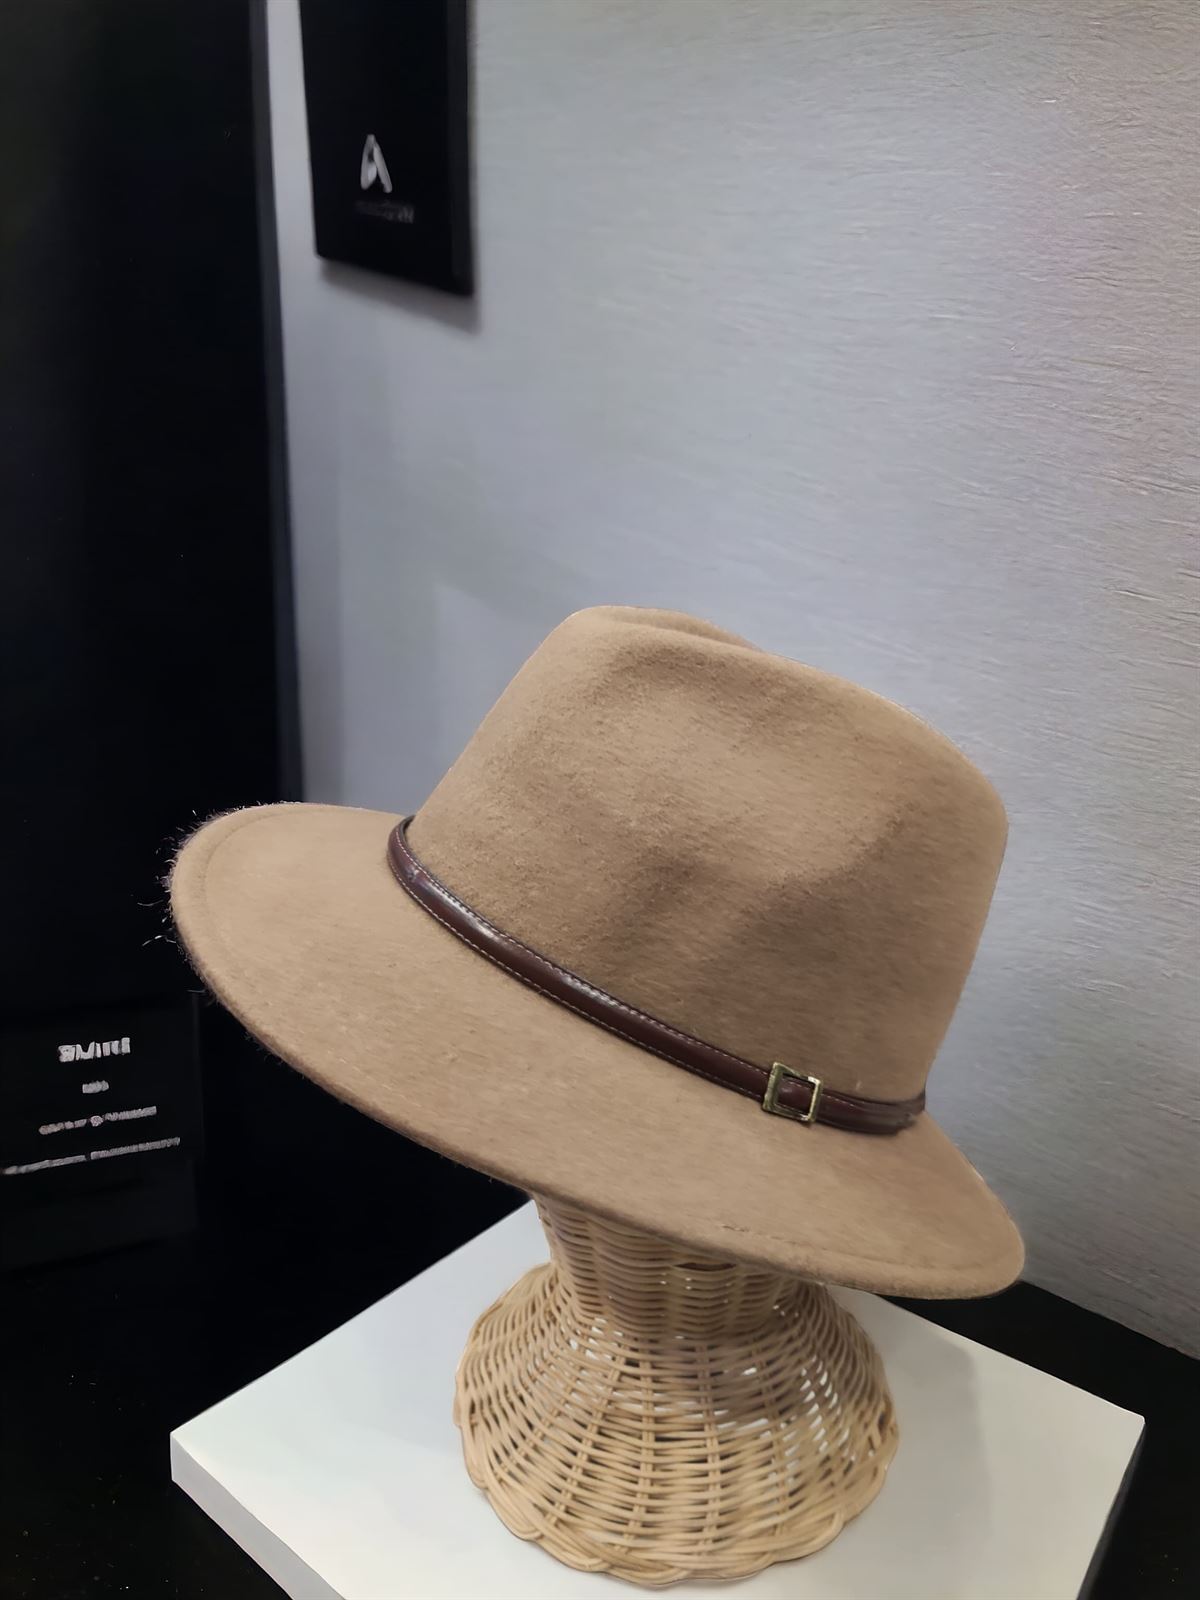 Sombrero fedora Camel de lana - Imagen 1